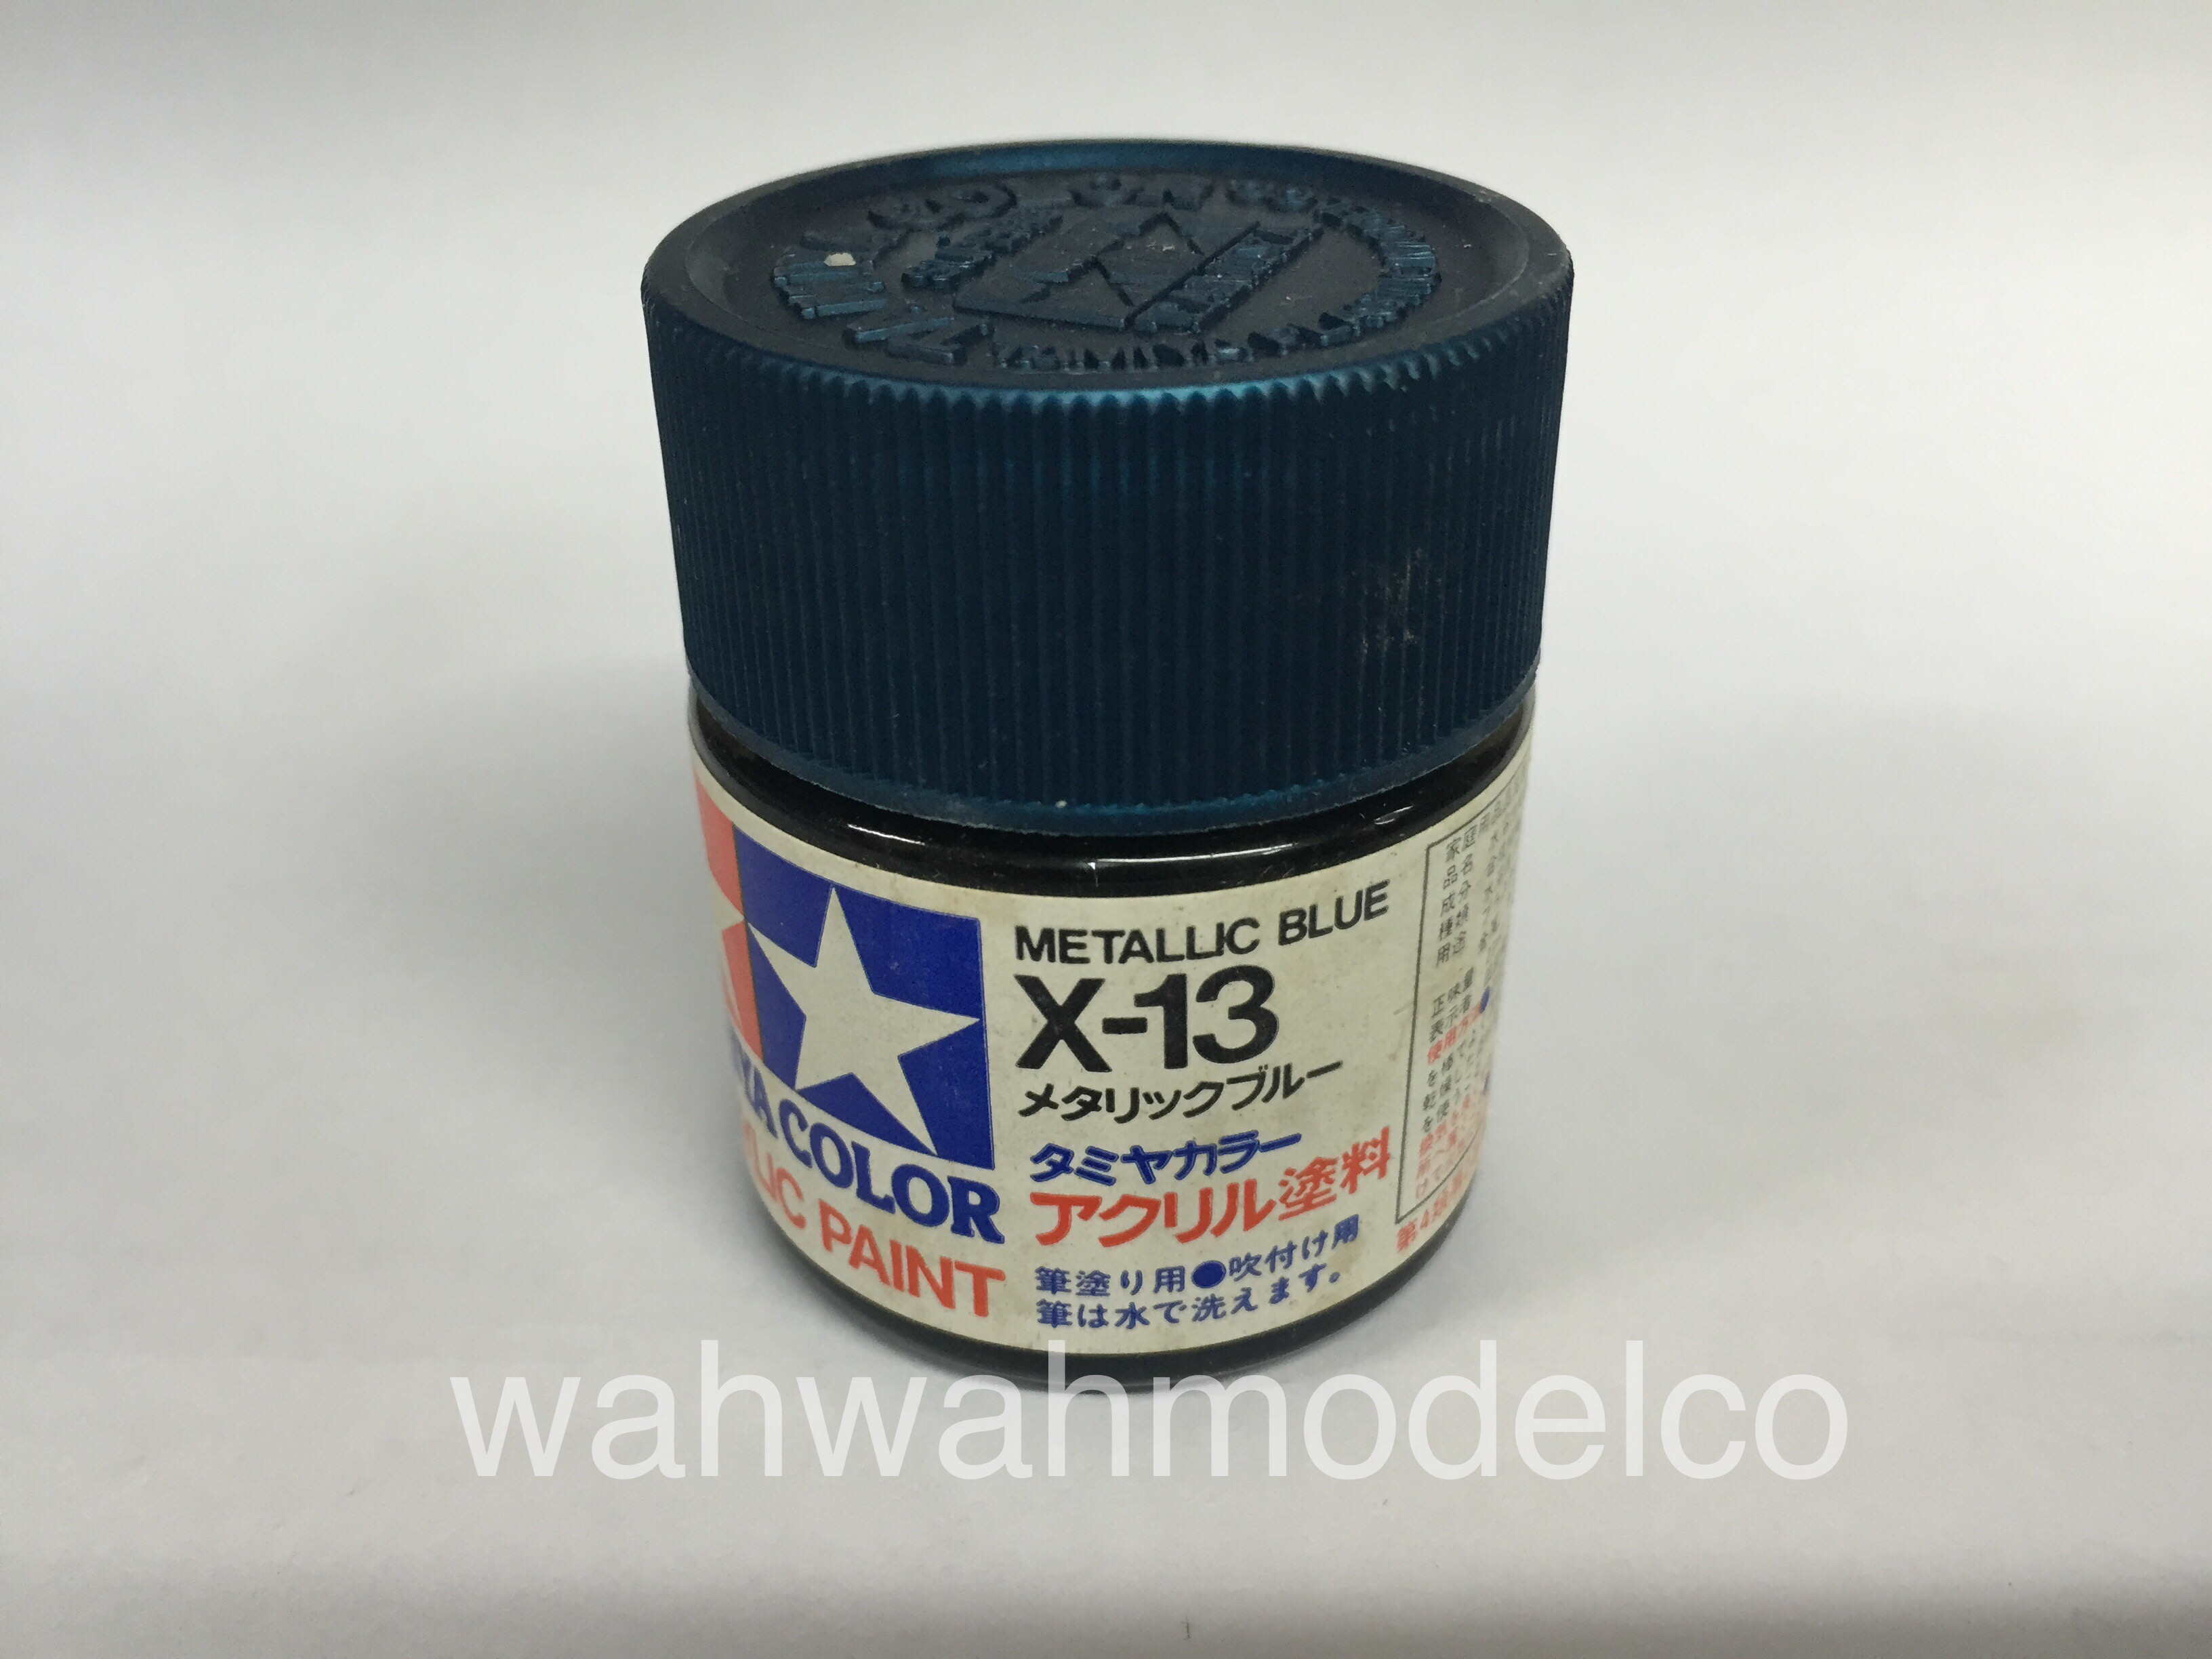 Tamiya Mini Acrylic model paint - X-13 81513 Metallic Blue